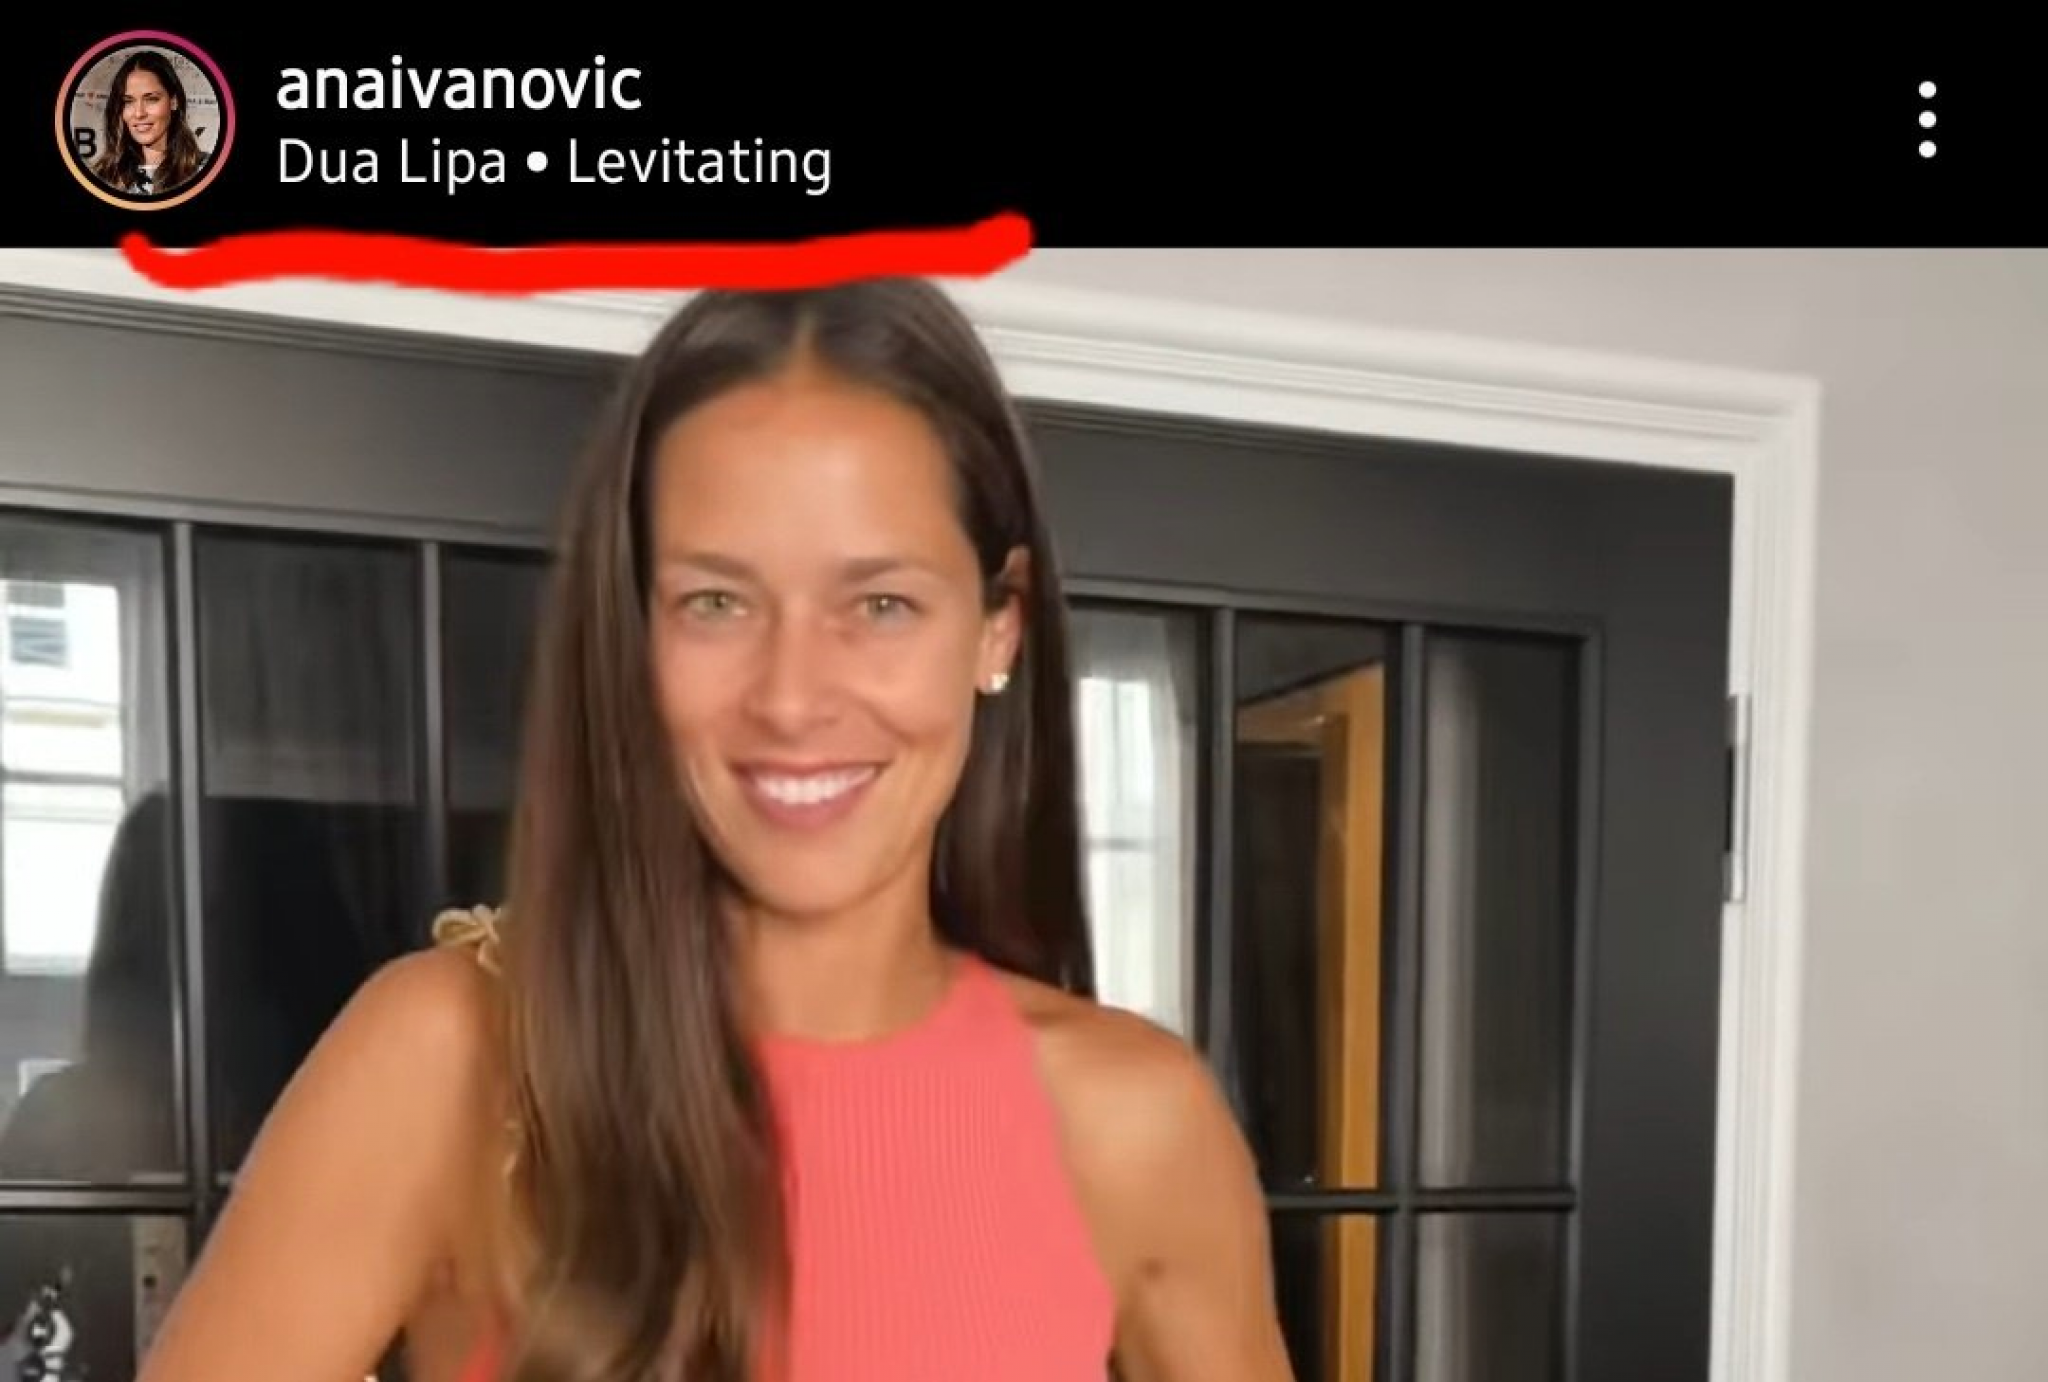 SKANDALOZNE UVREDE NA RAČUN ANE IVANOVIĆ! Srpska teniserka na meti napada: 